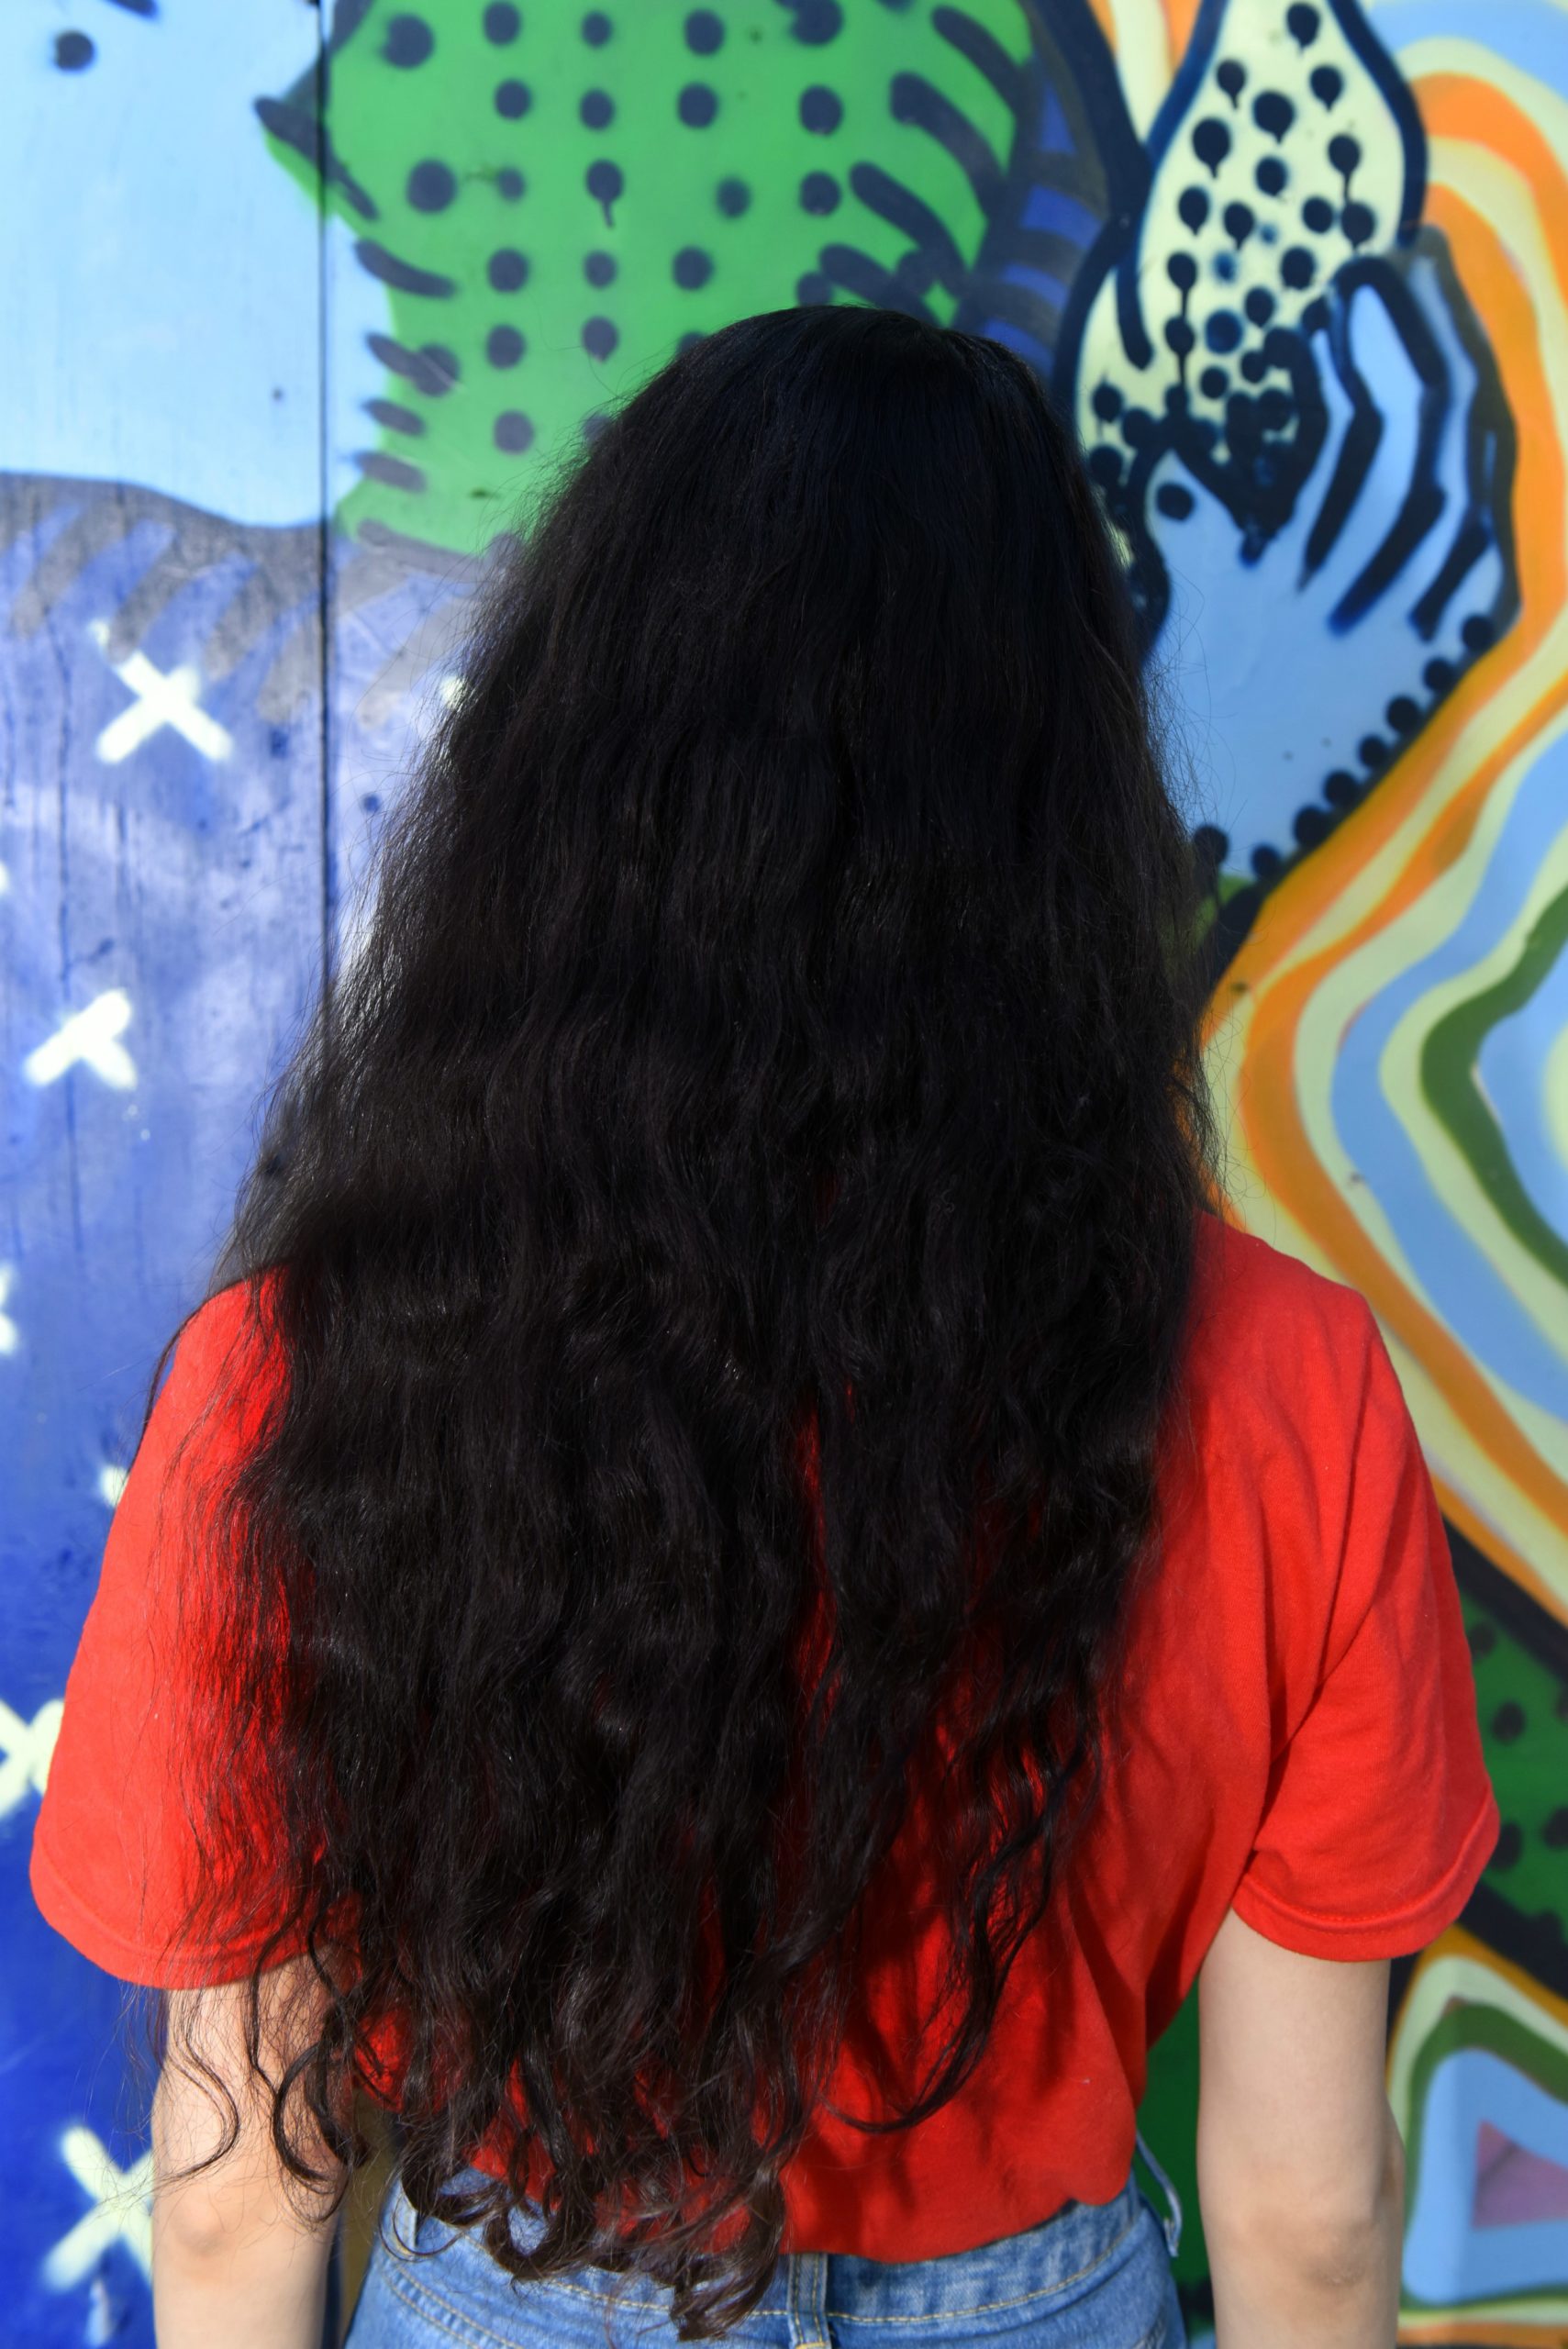 <img src="ana.jpg" alt="ana long curly thick hair after salon"/> 